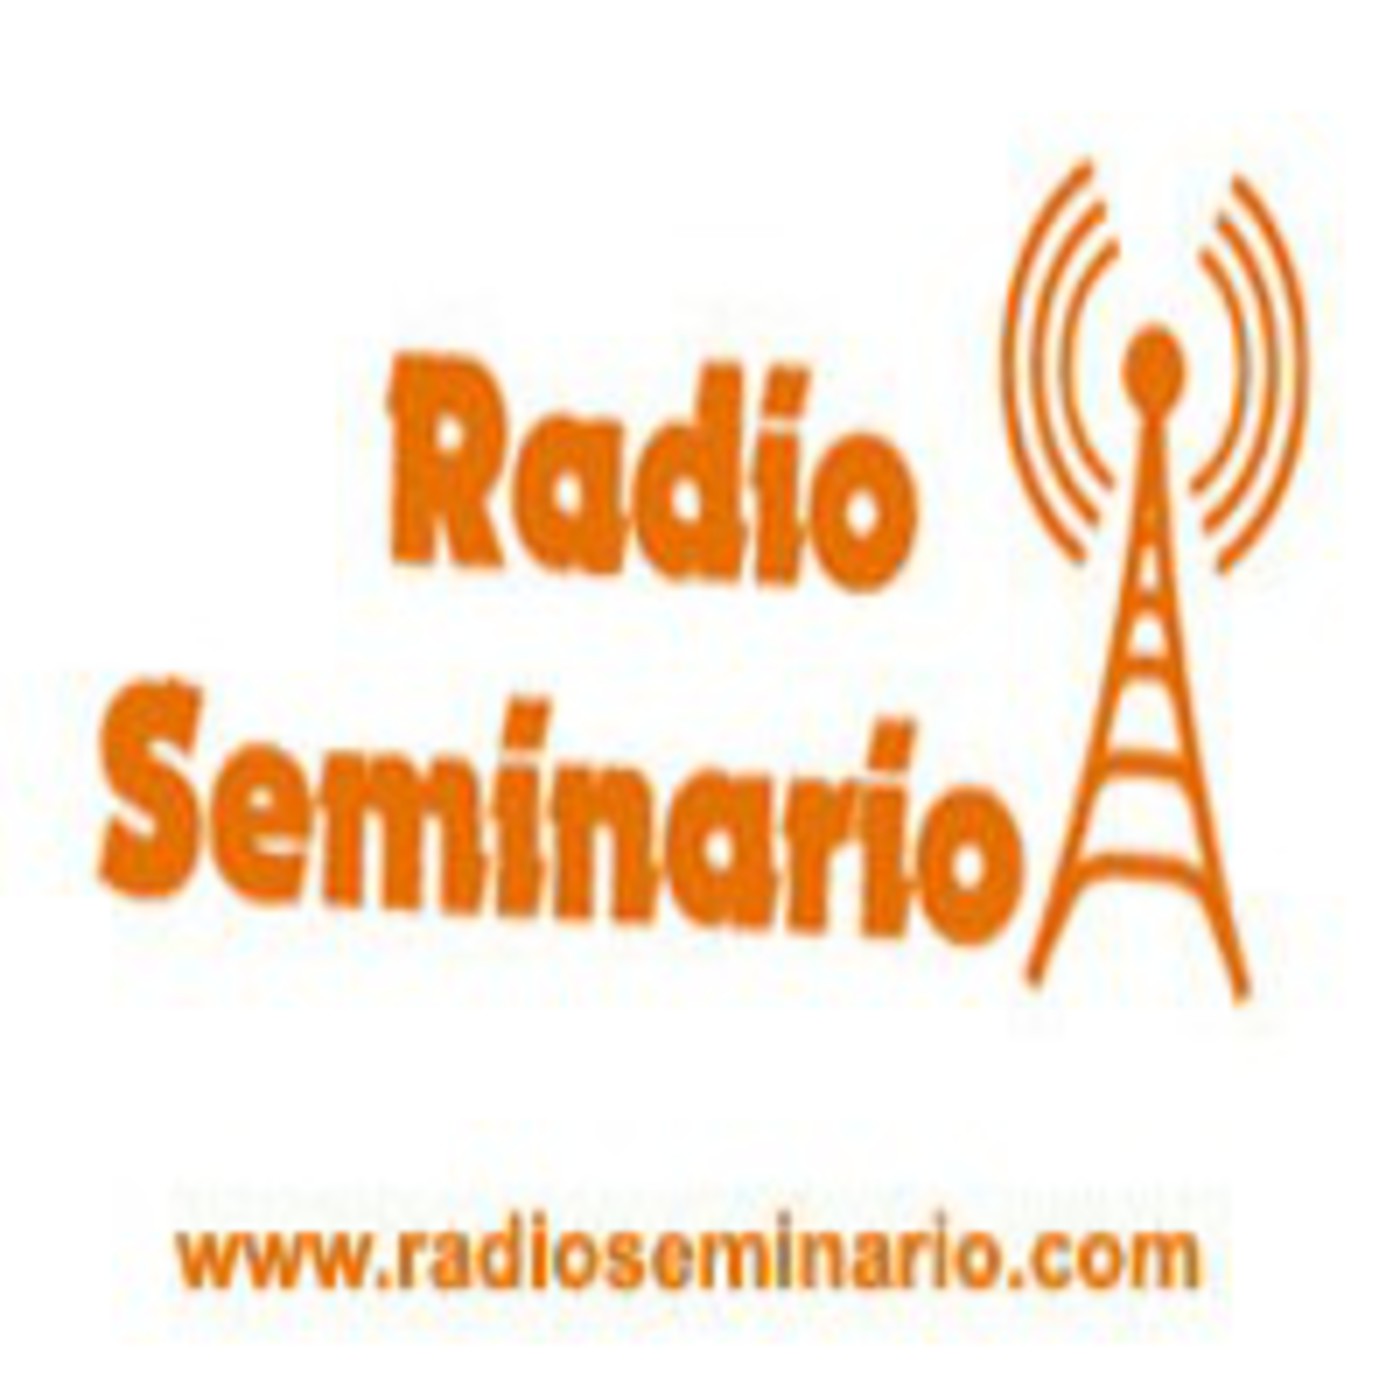 Podcast Radio Seminario